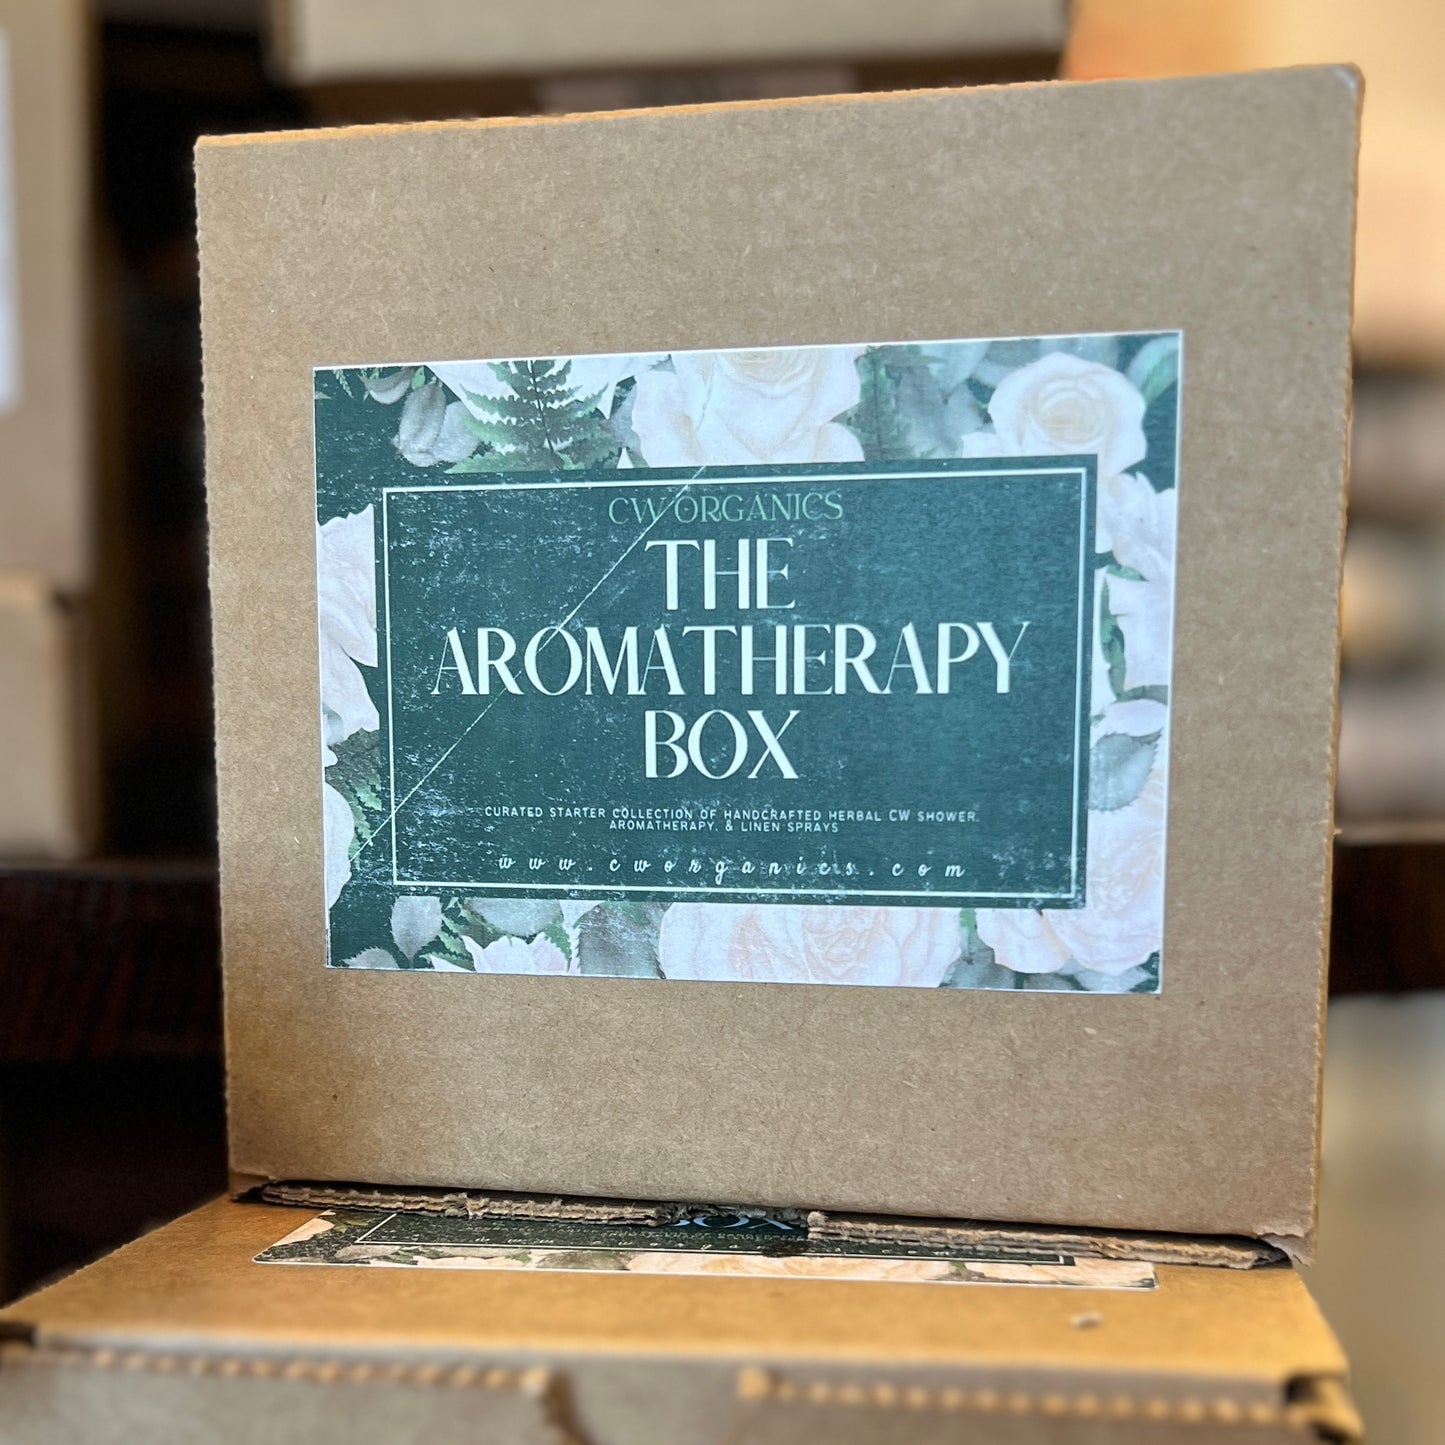 The Aromatherapy Box